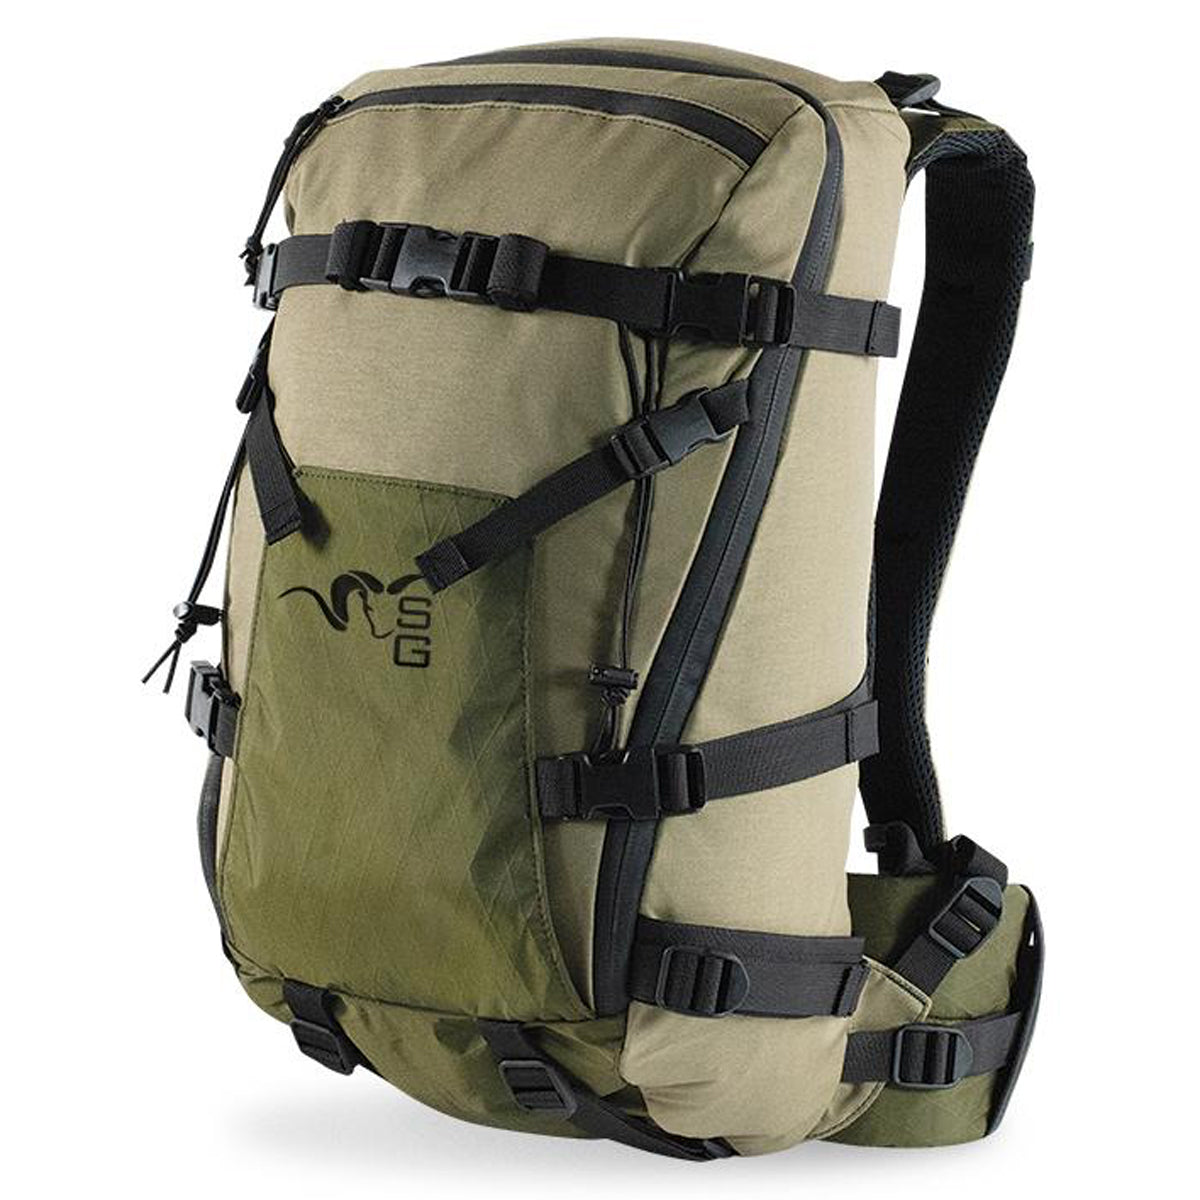 Stone Glacier Avail 2200 Backpack in Stone Glacier Avail 2200 Backpack - goHUNT Shop by GOHUNT | Stone Glacier - GOHUNT Shop